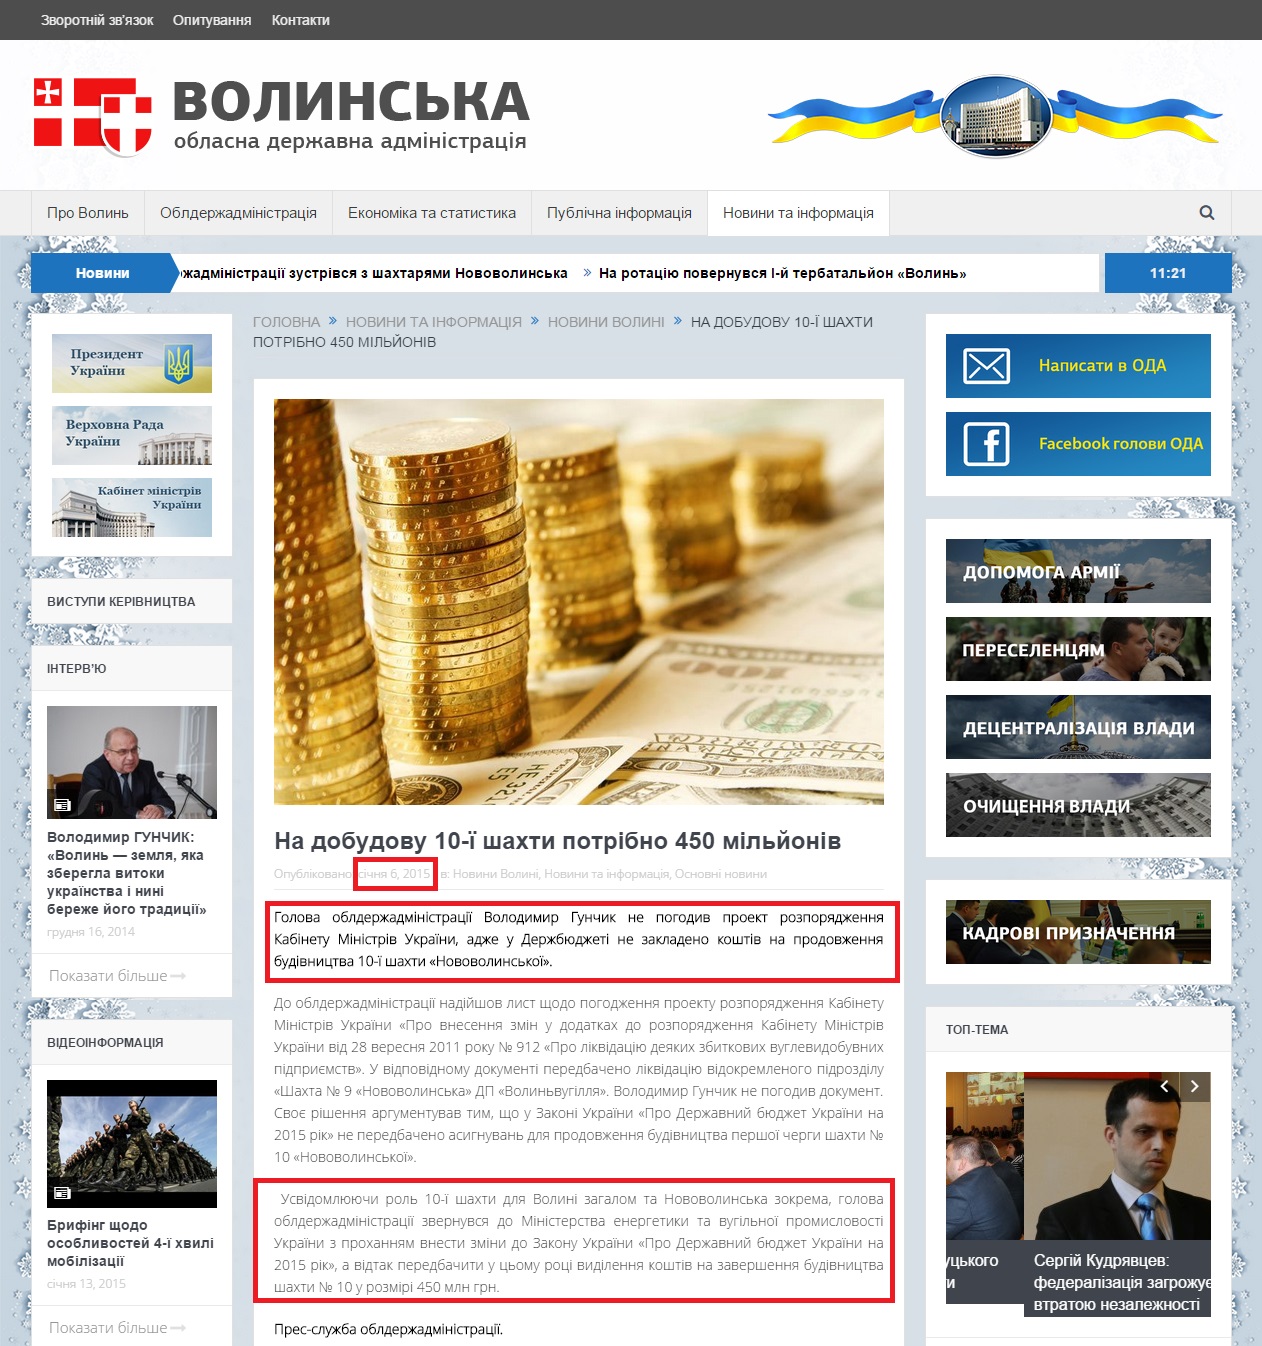 http://voladm.gov.ua/na-dobudovu-10-%D1%97-shaxti-potribno-450-miljoniv/